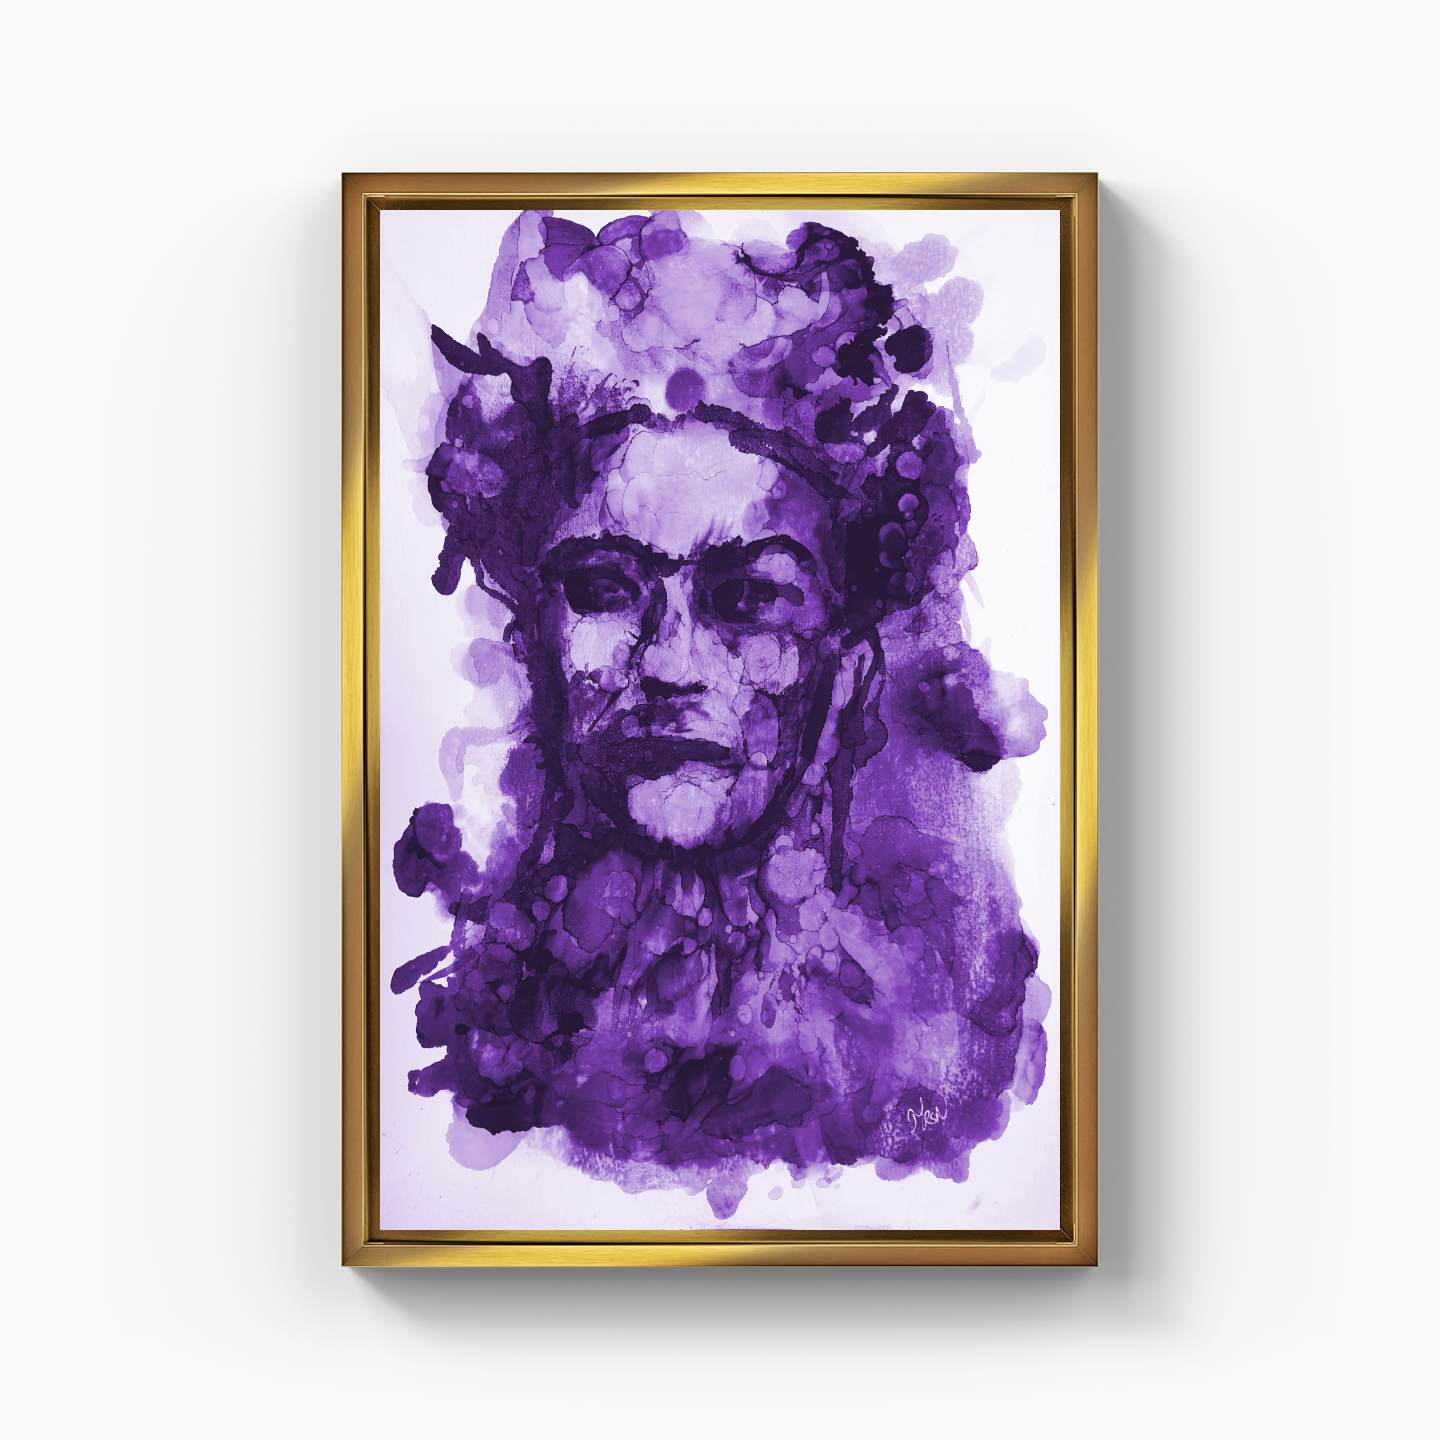 Frida Kahlo - Mor - Kanvas Tablo